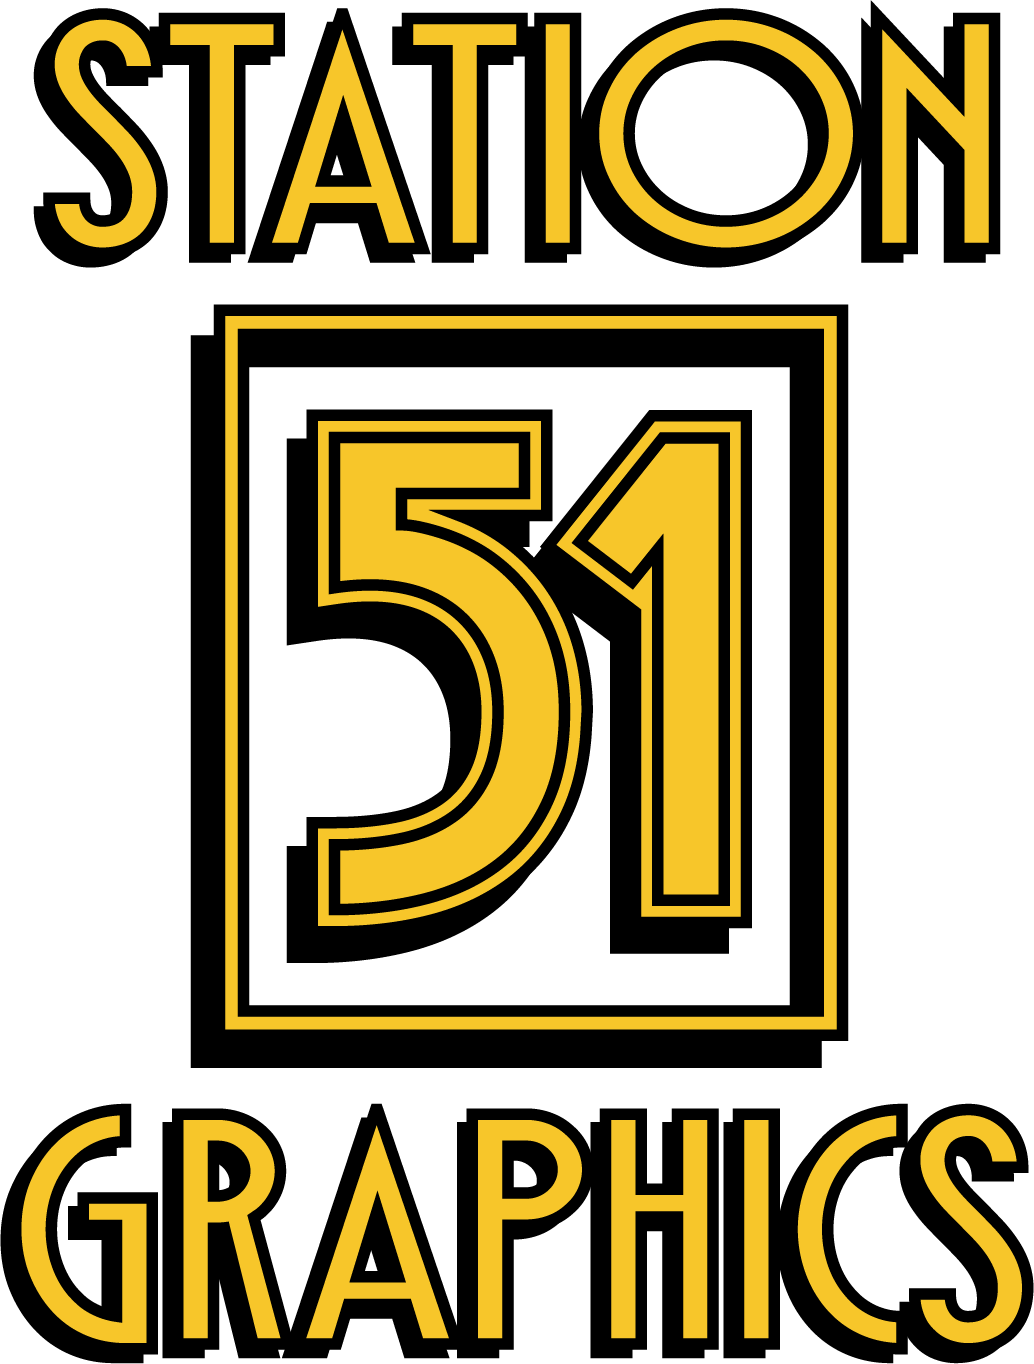 Station 51 Graphics, LLC Logo